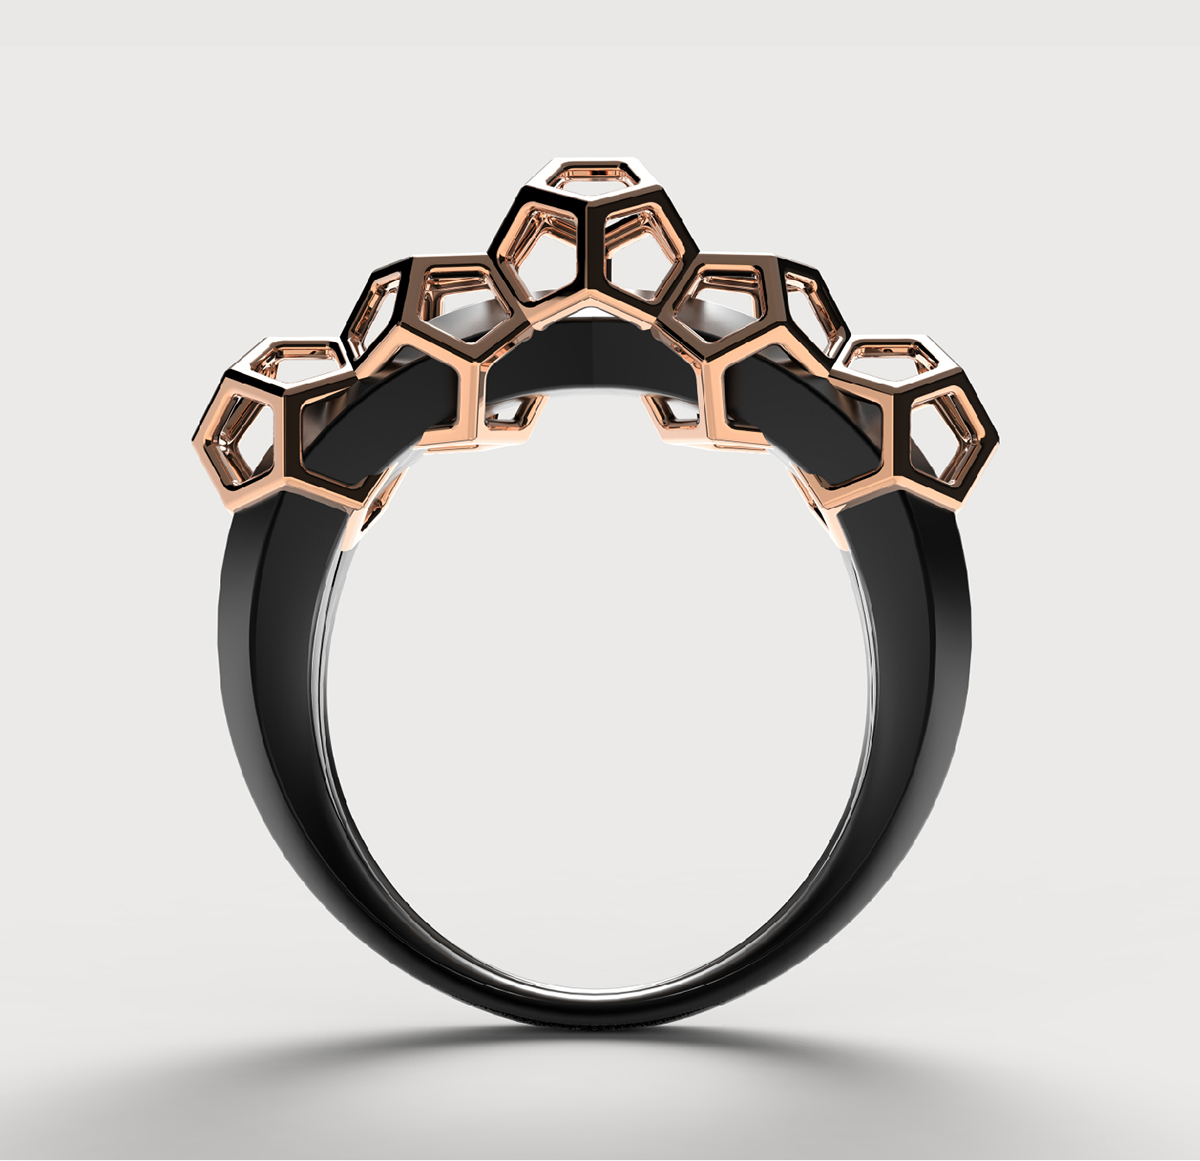 IYNO keyshot Rhino ring pendant mettalic geometric Polyhedron minimalist Rose Gold jewelry life Russia